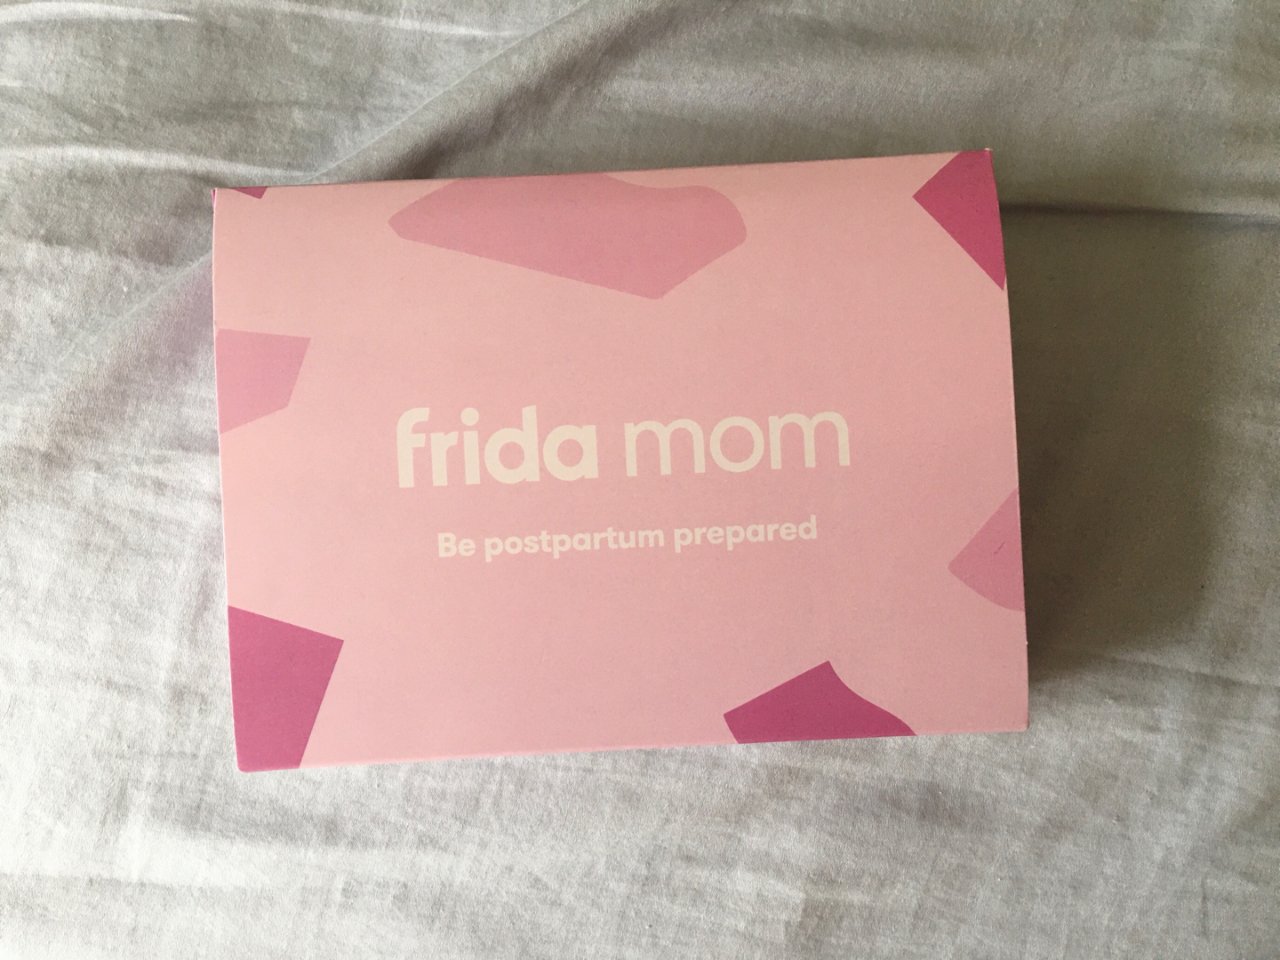 Frida Mom